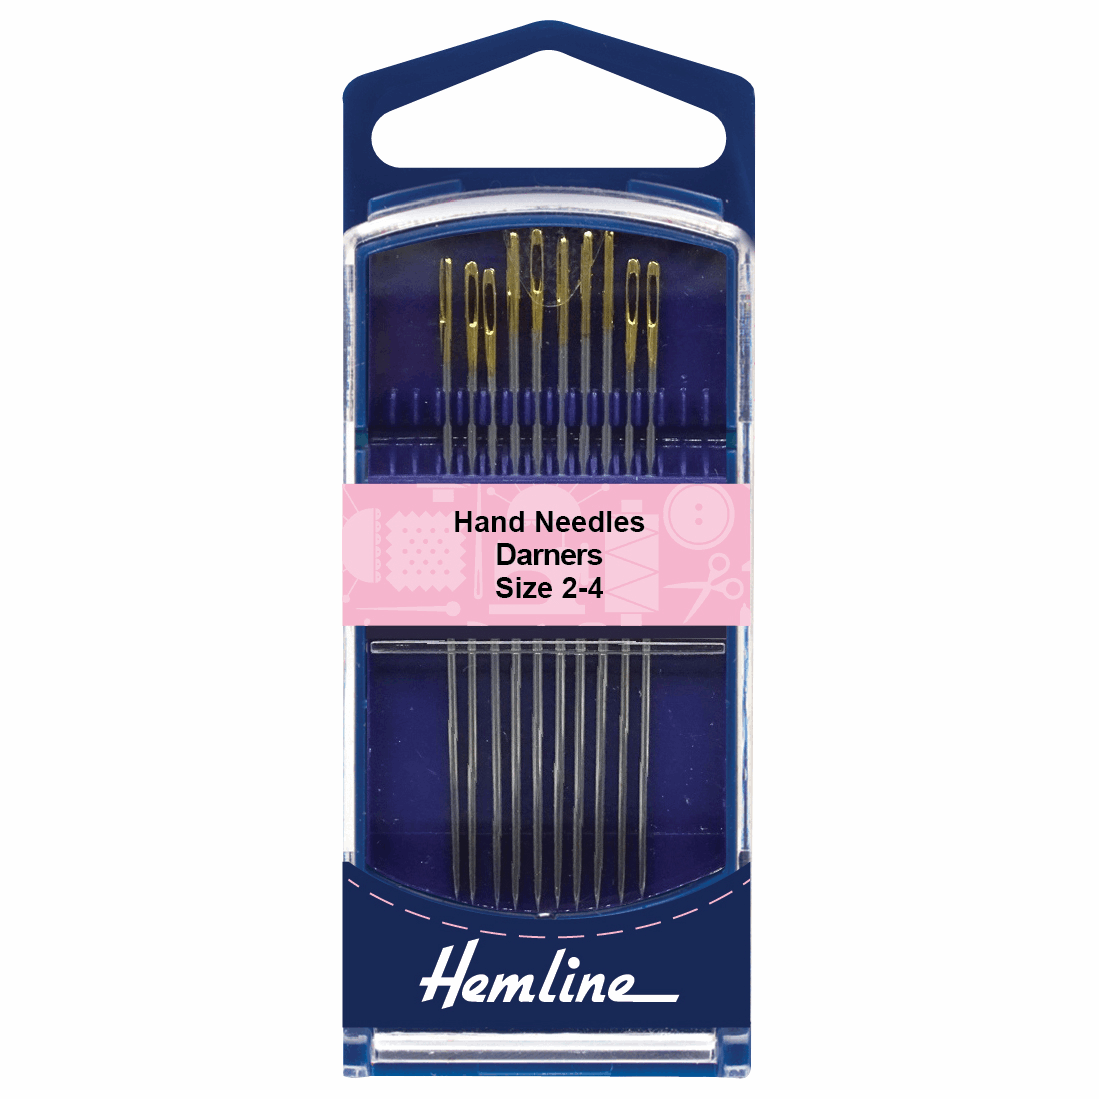 Darners Needles - Size 2-4 (Hemline Premium)